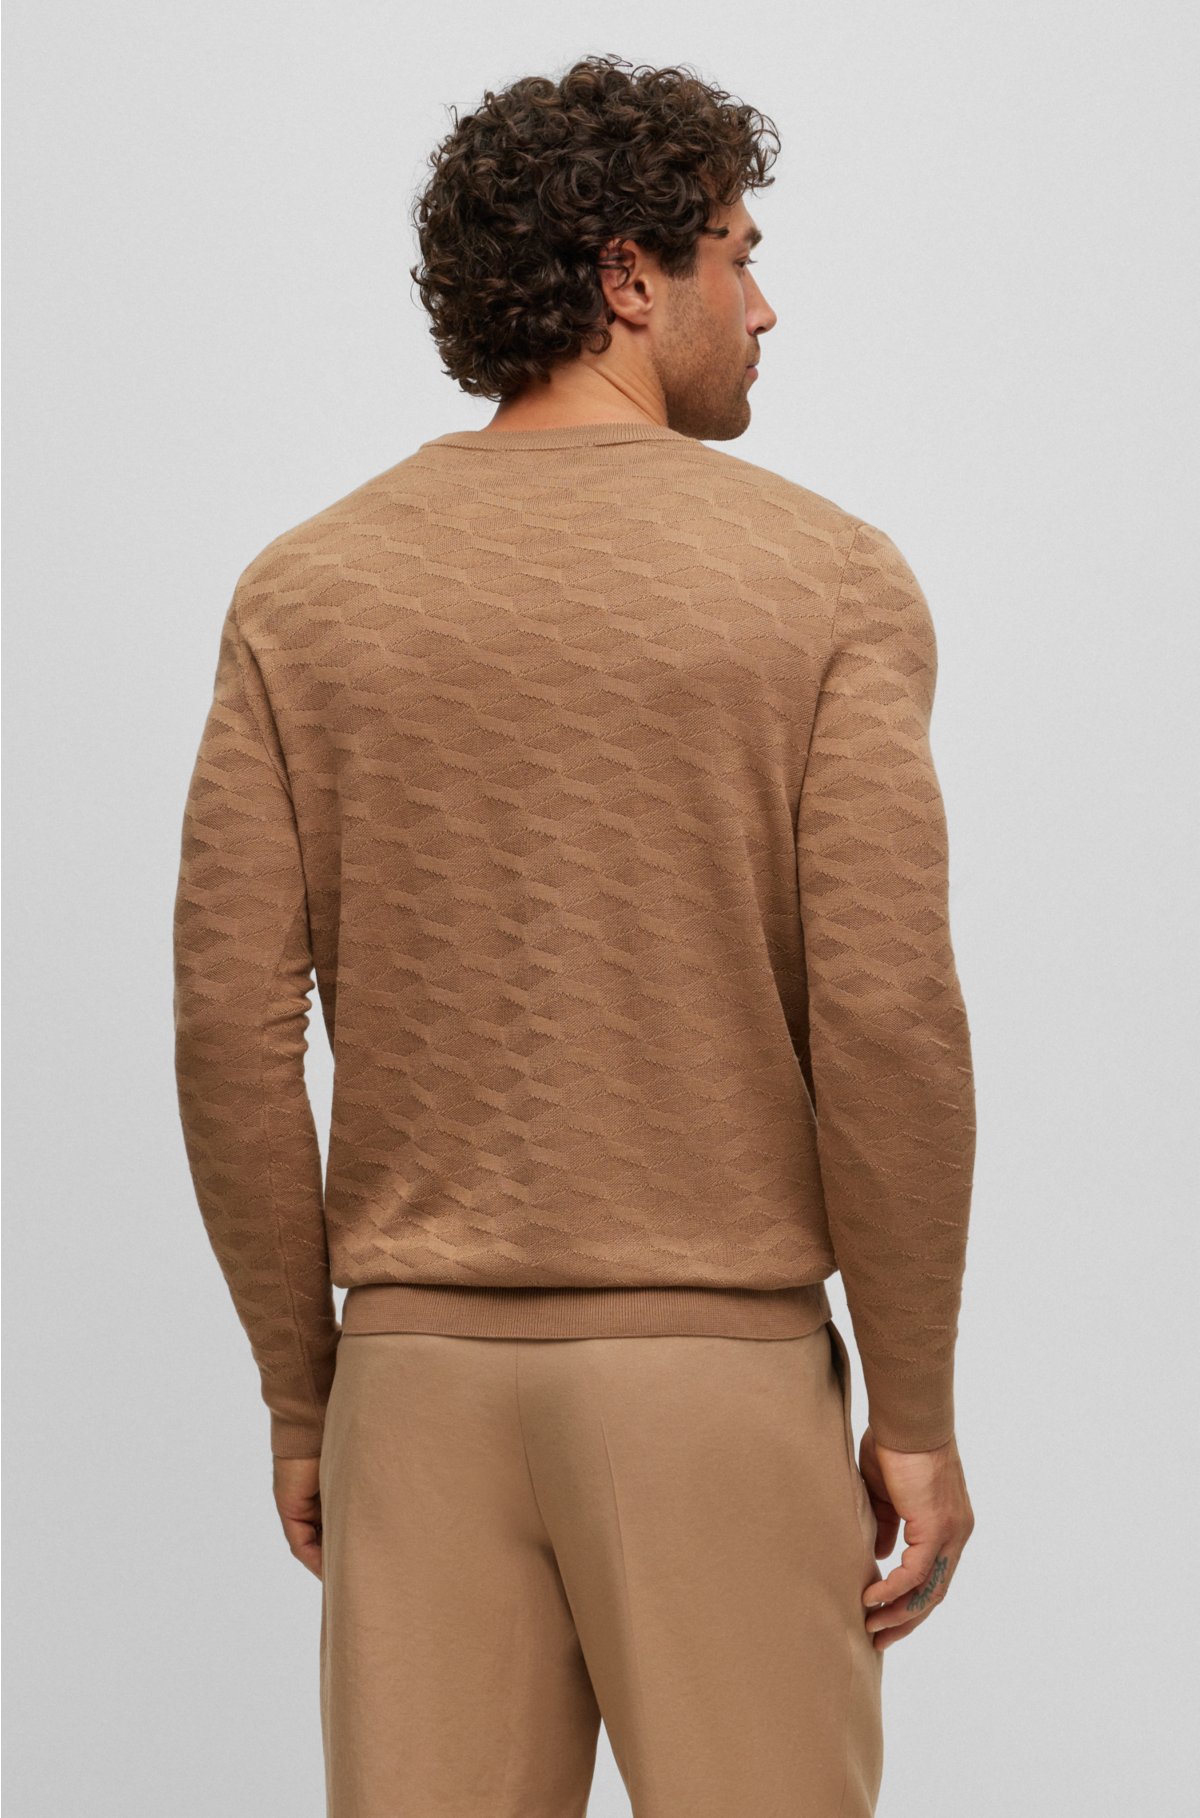 Silk sweater with jacquard pattern, Beige